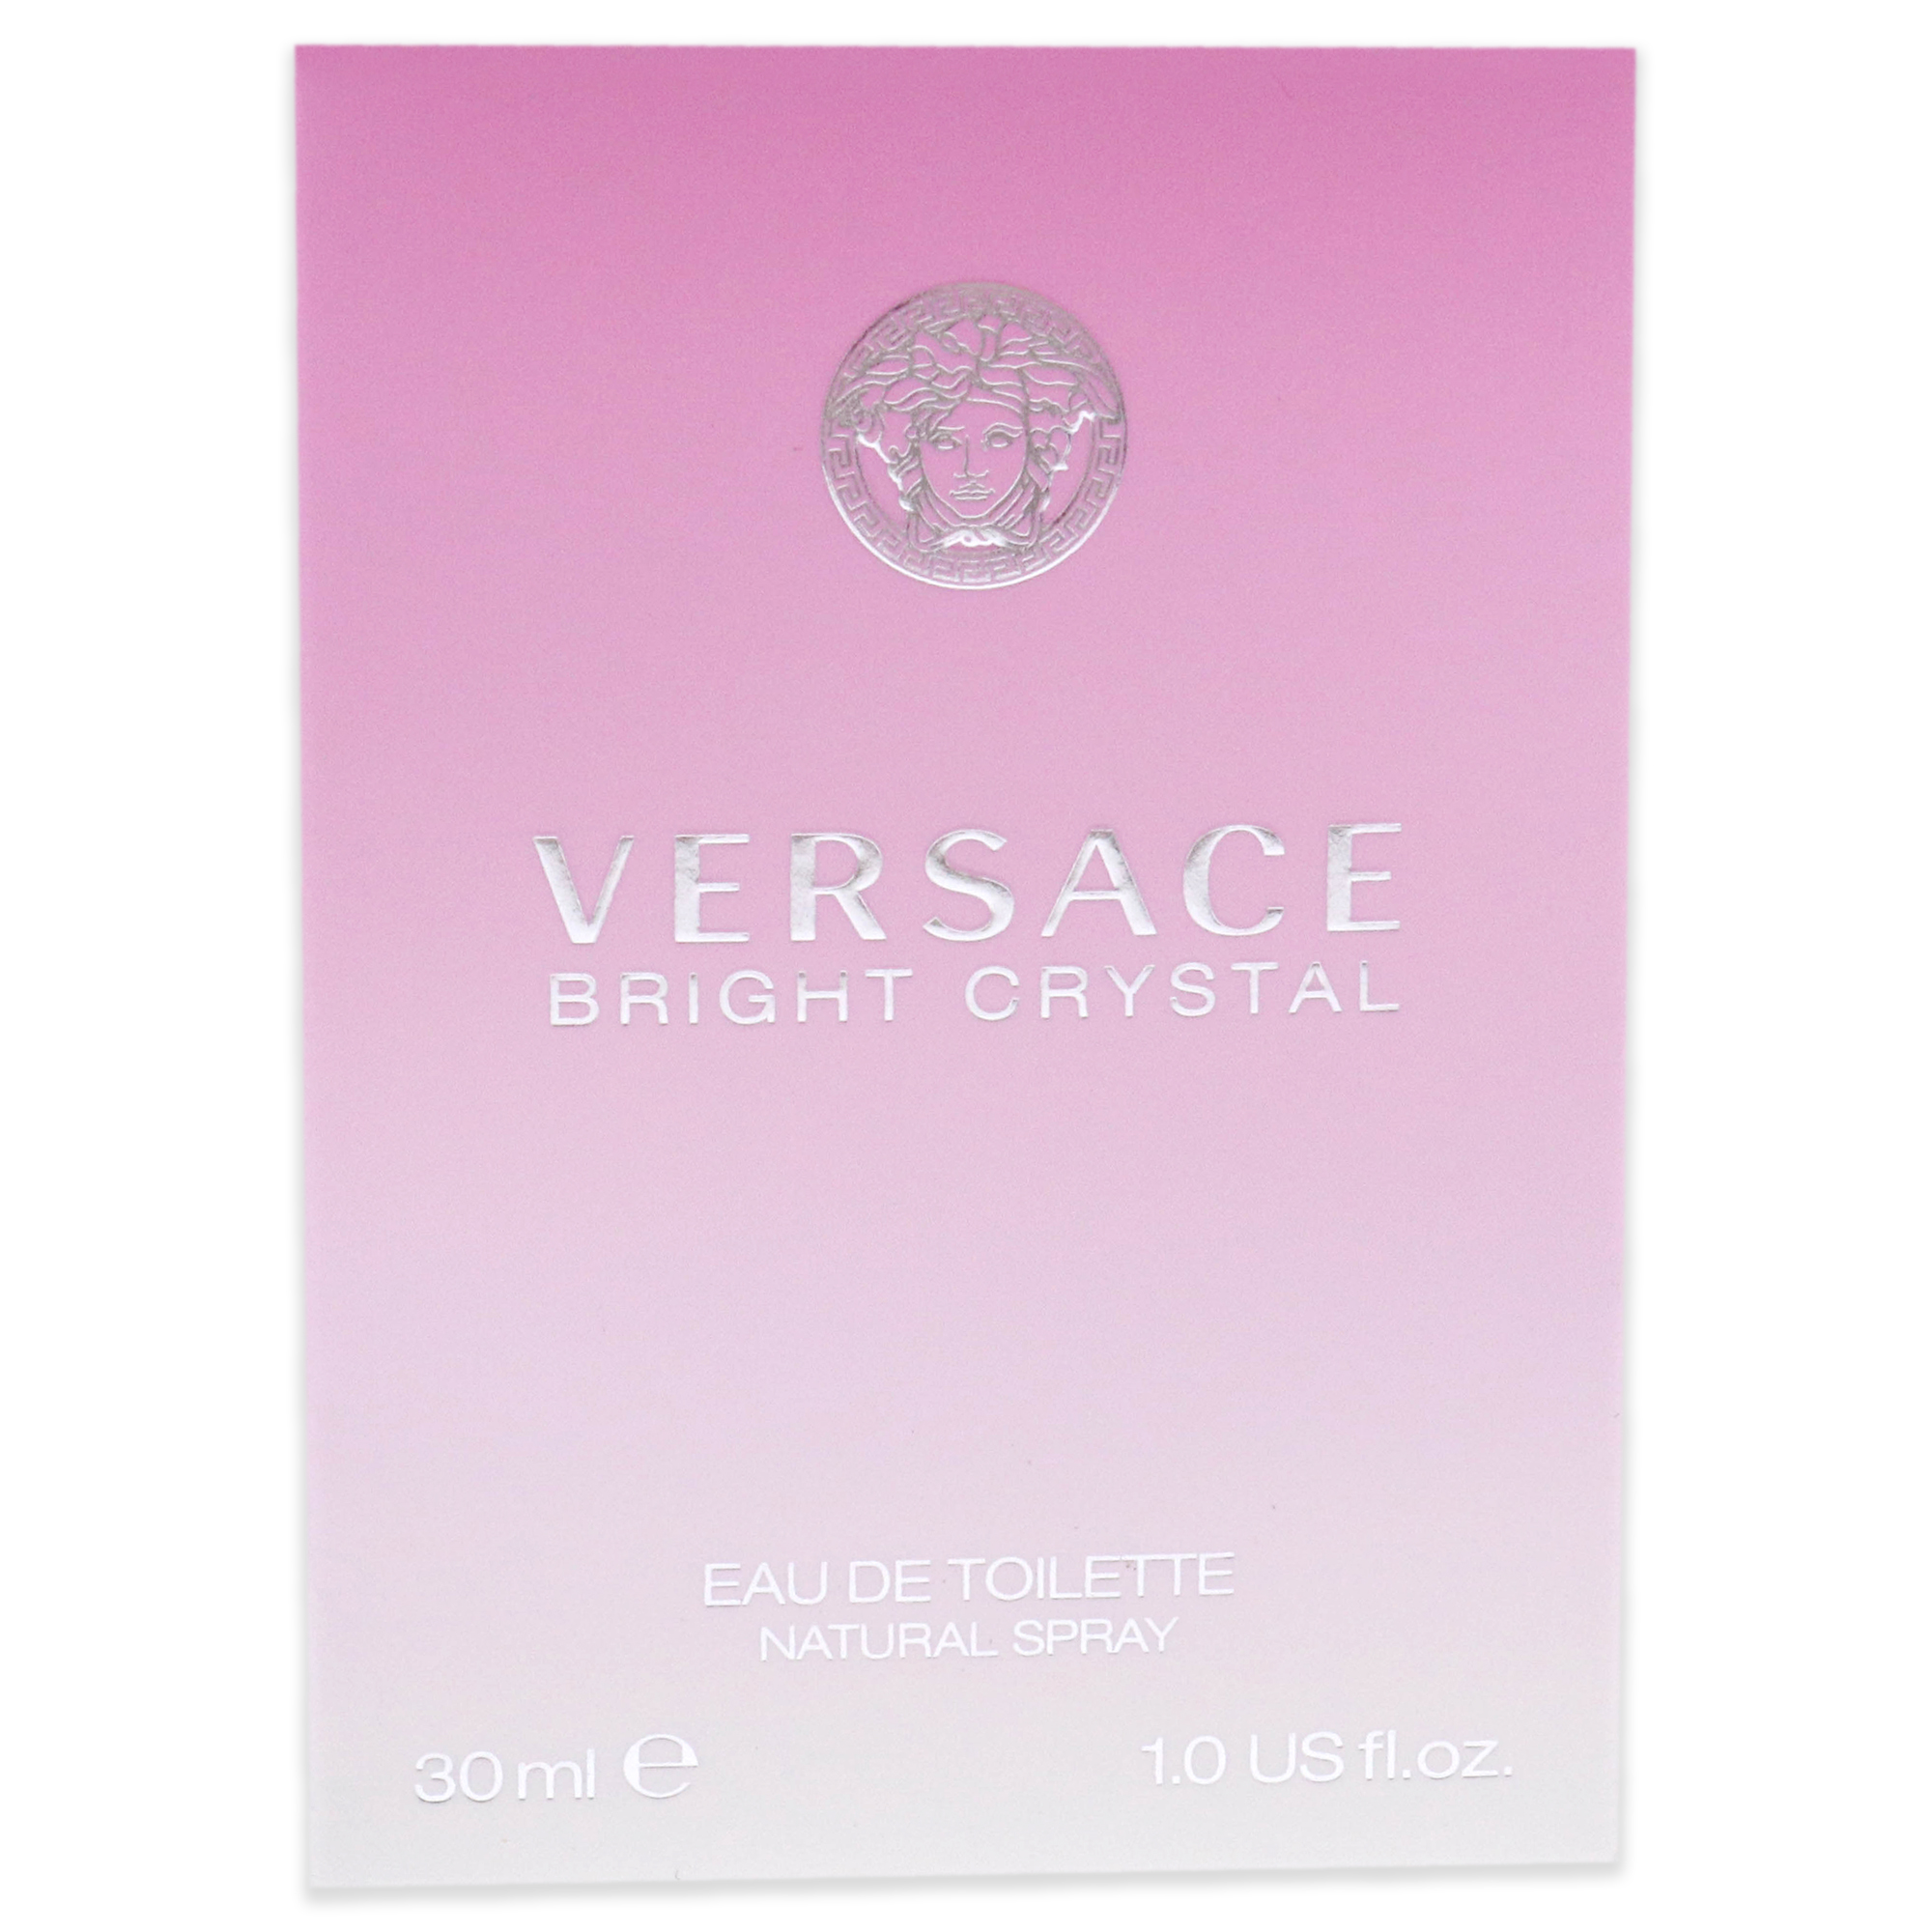 Bright Crystal by Versace Eau De Toilette Spray 1 oz for Women - image 5 of 6